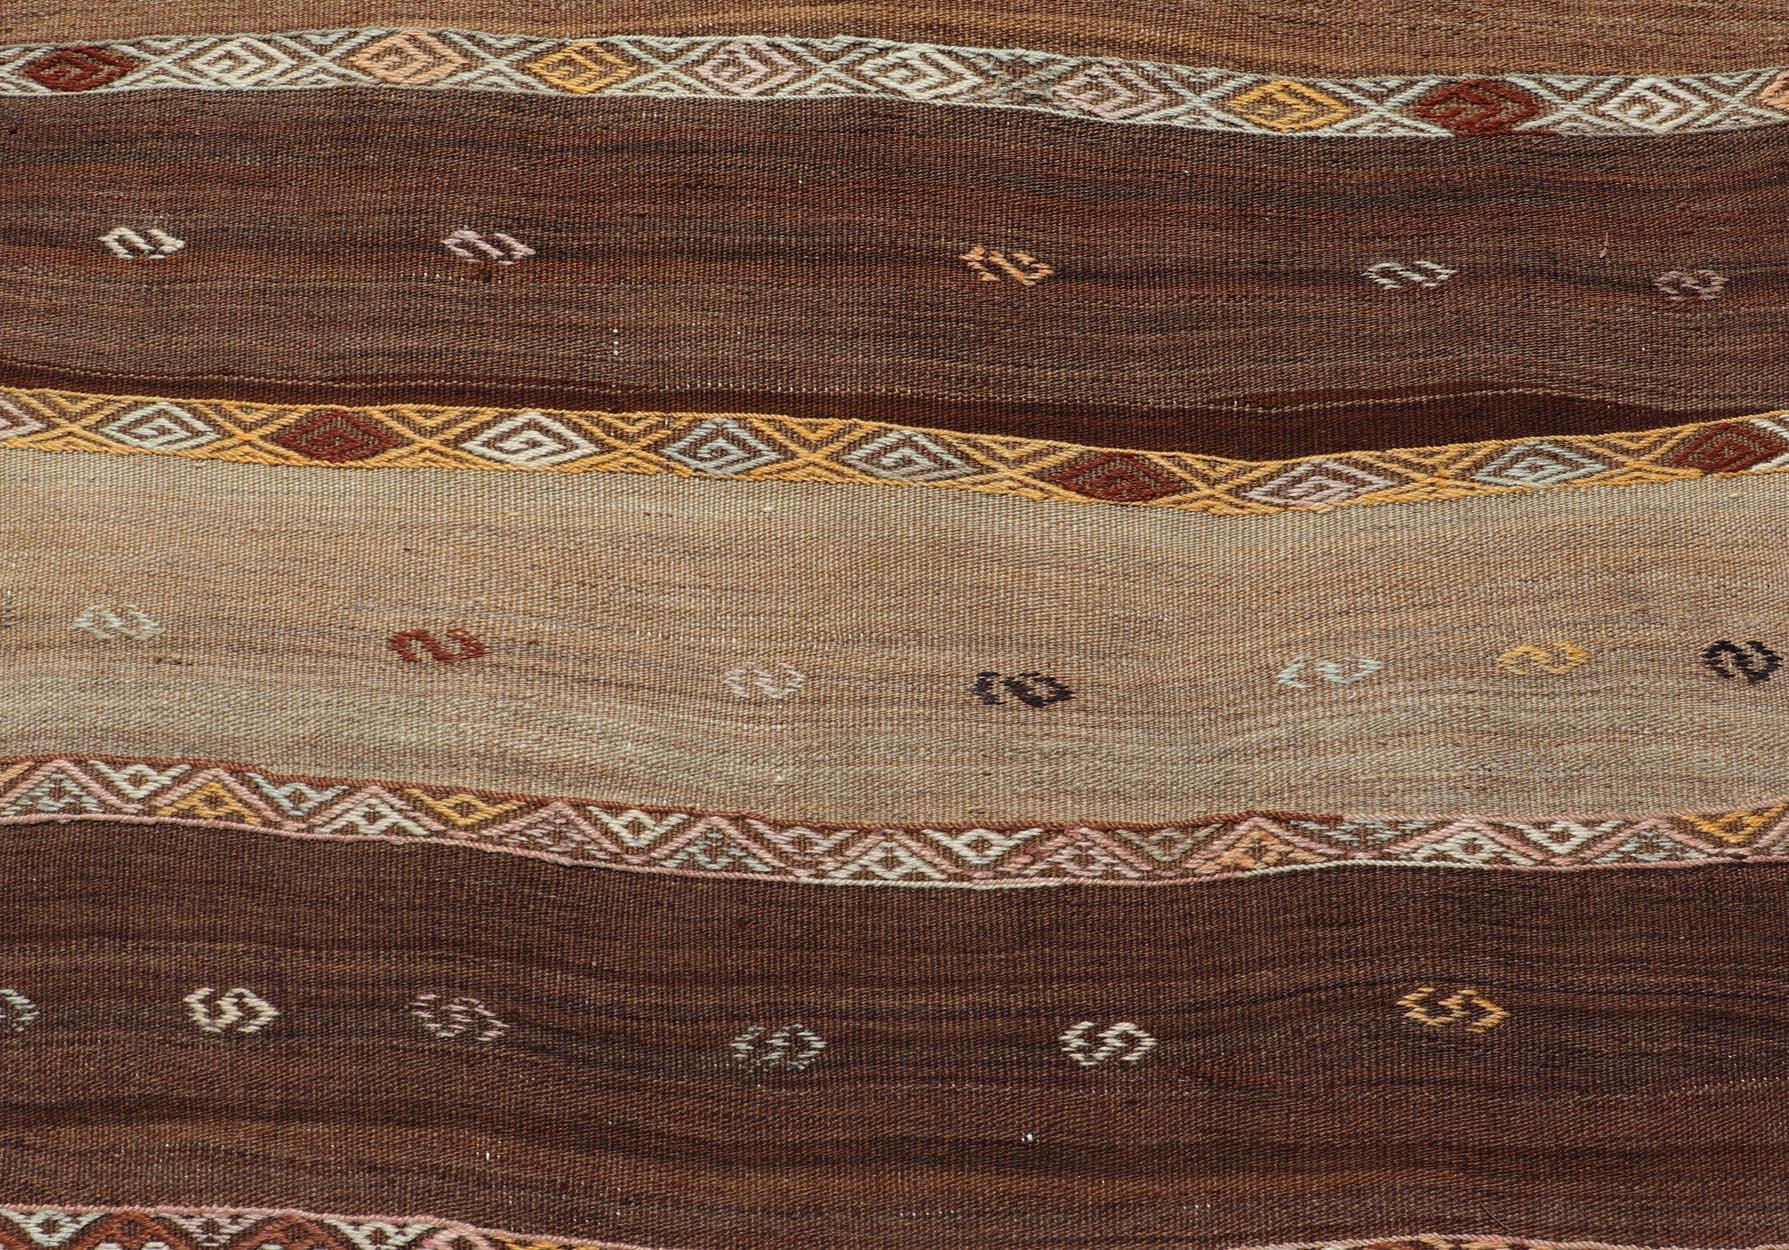 Vintage Earthy Kilim Gallery Runner with Stripe Design in Multi Colors & Motif's. Keivan Woven Arts / rug EN-178669, country of origin / type: Turkey / Kilim, circa 1950.
Measures: 4'6 x 11'7 
Featuring a striking stripe design, this unique